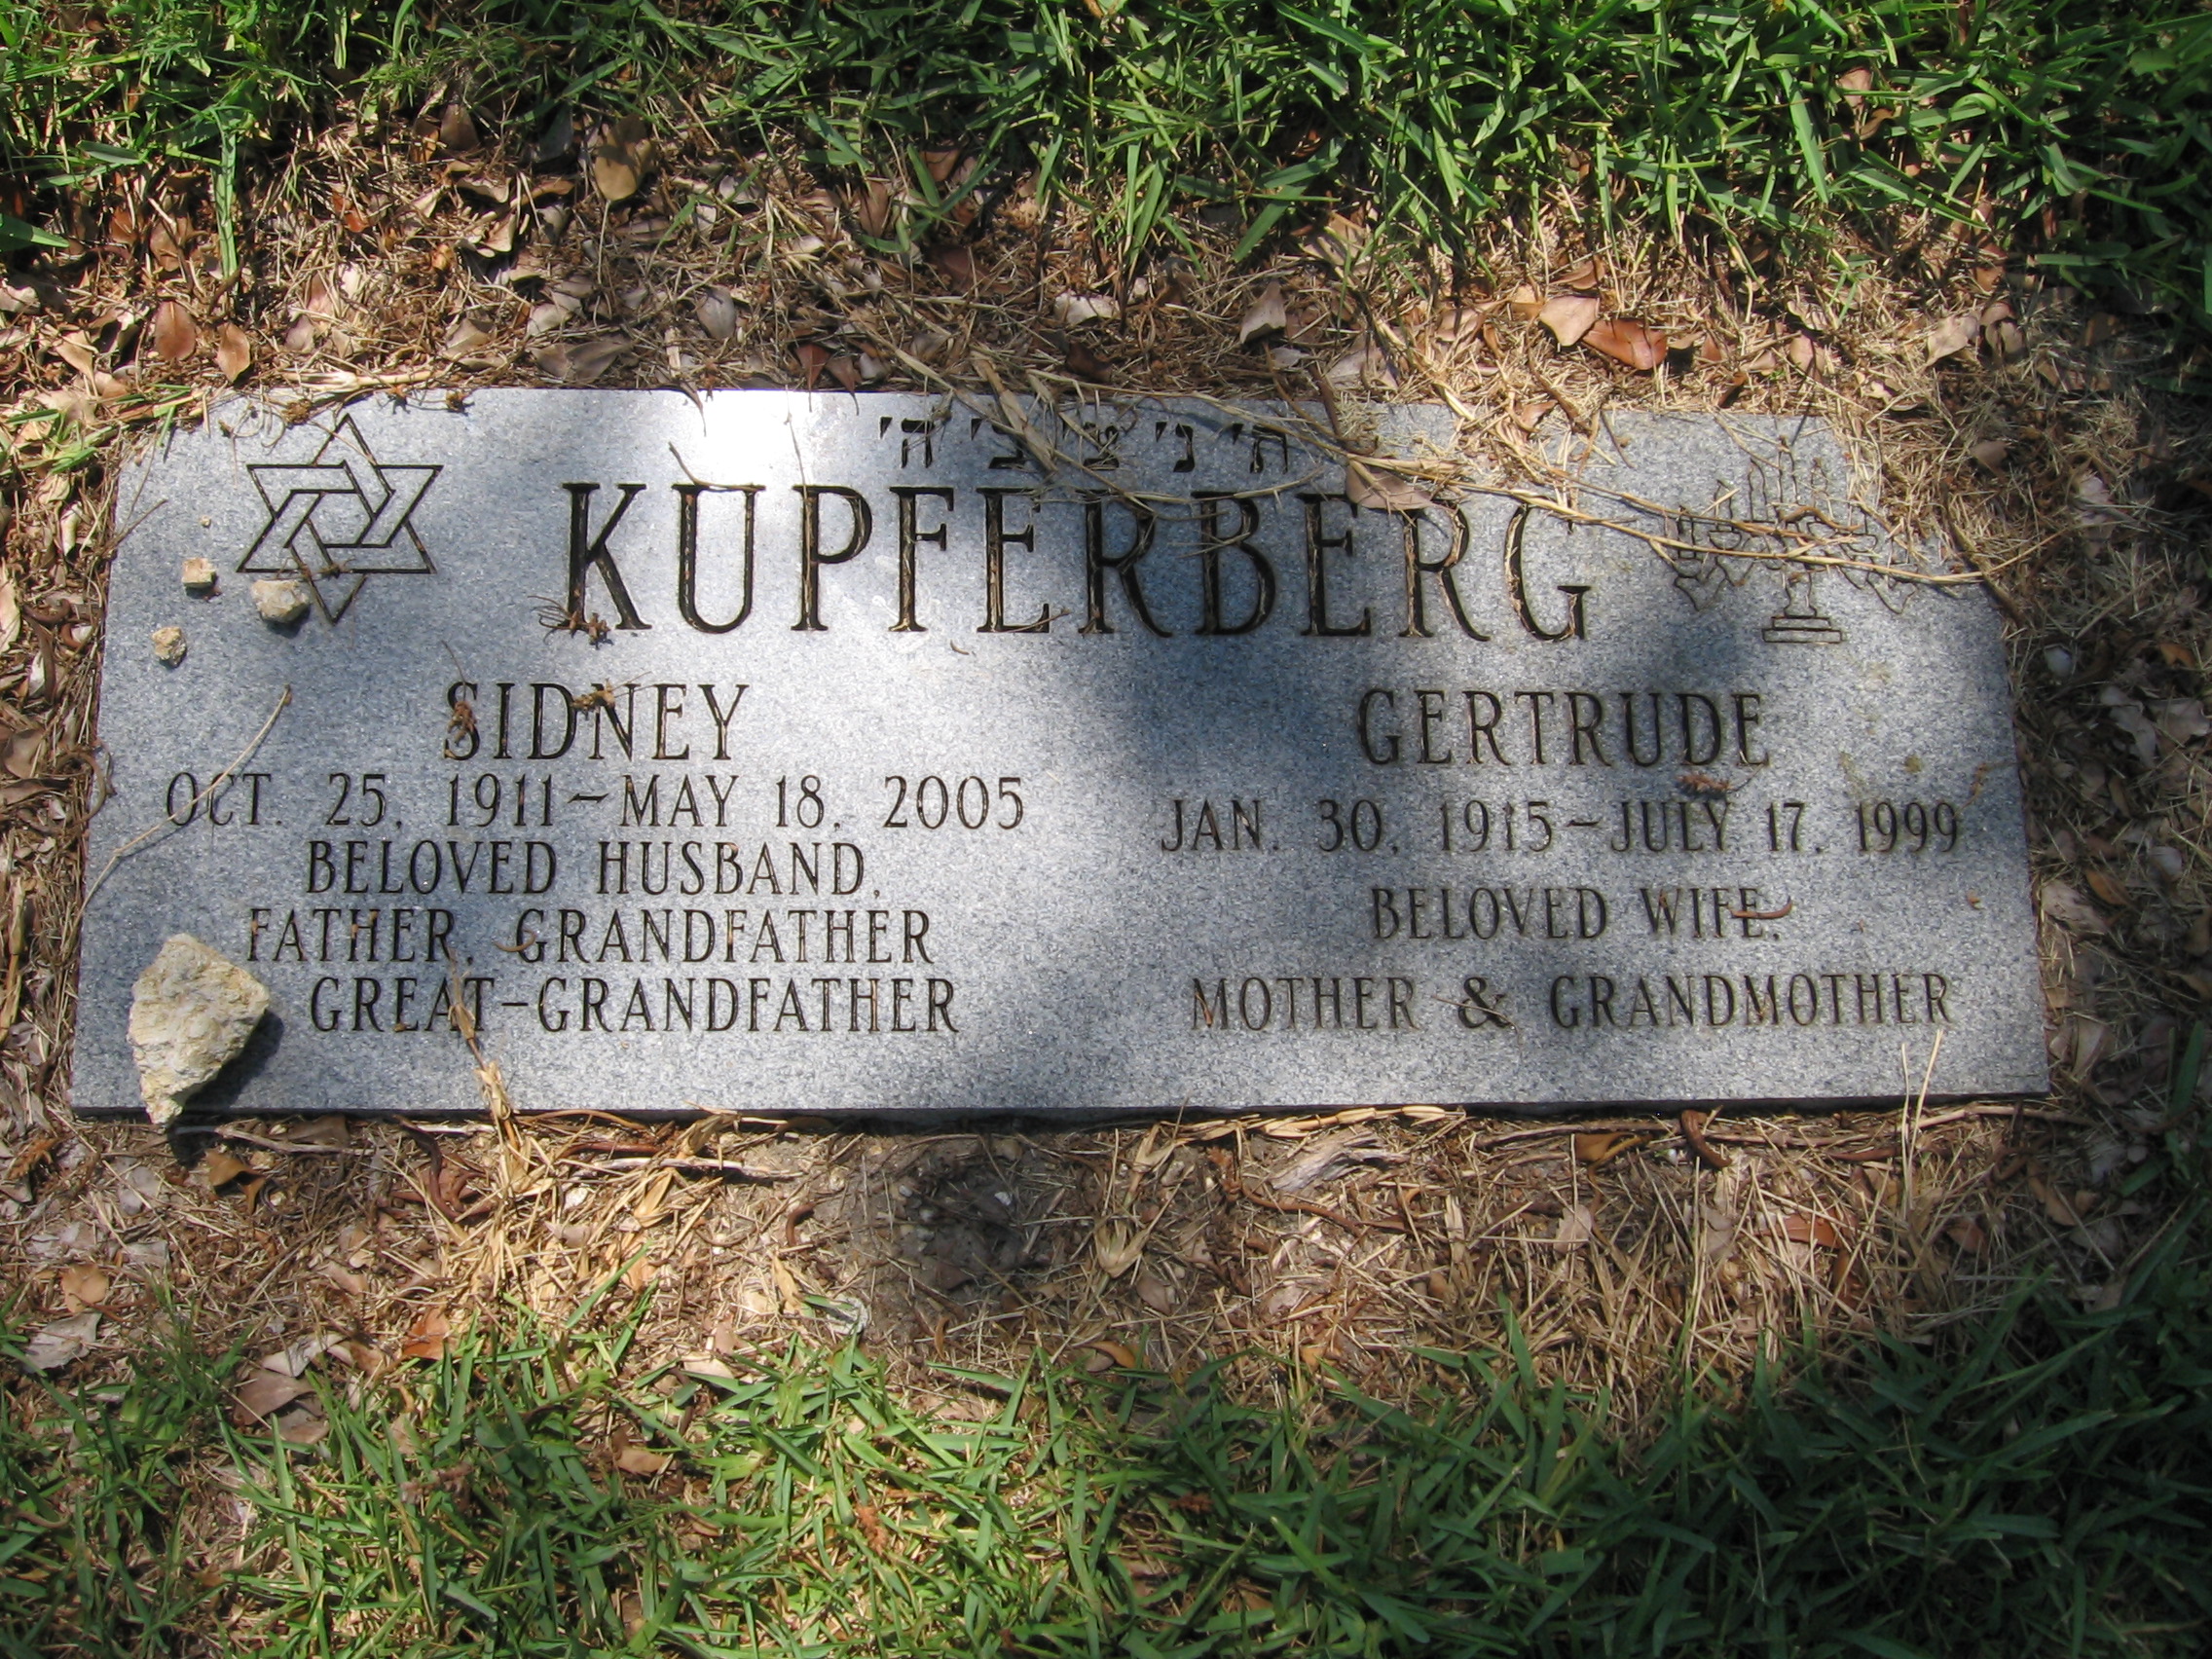 Sidney Kupferberg